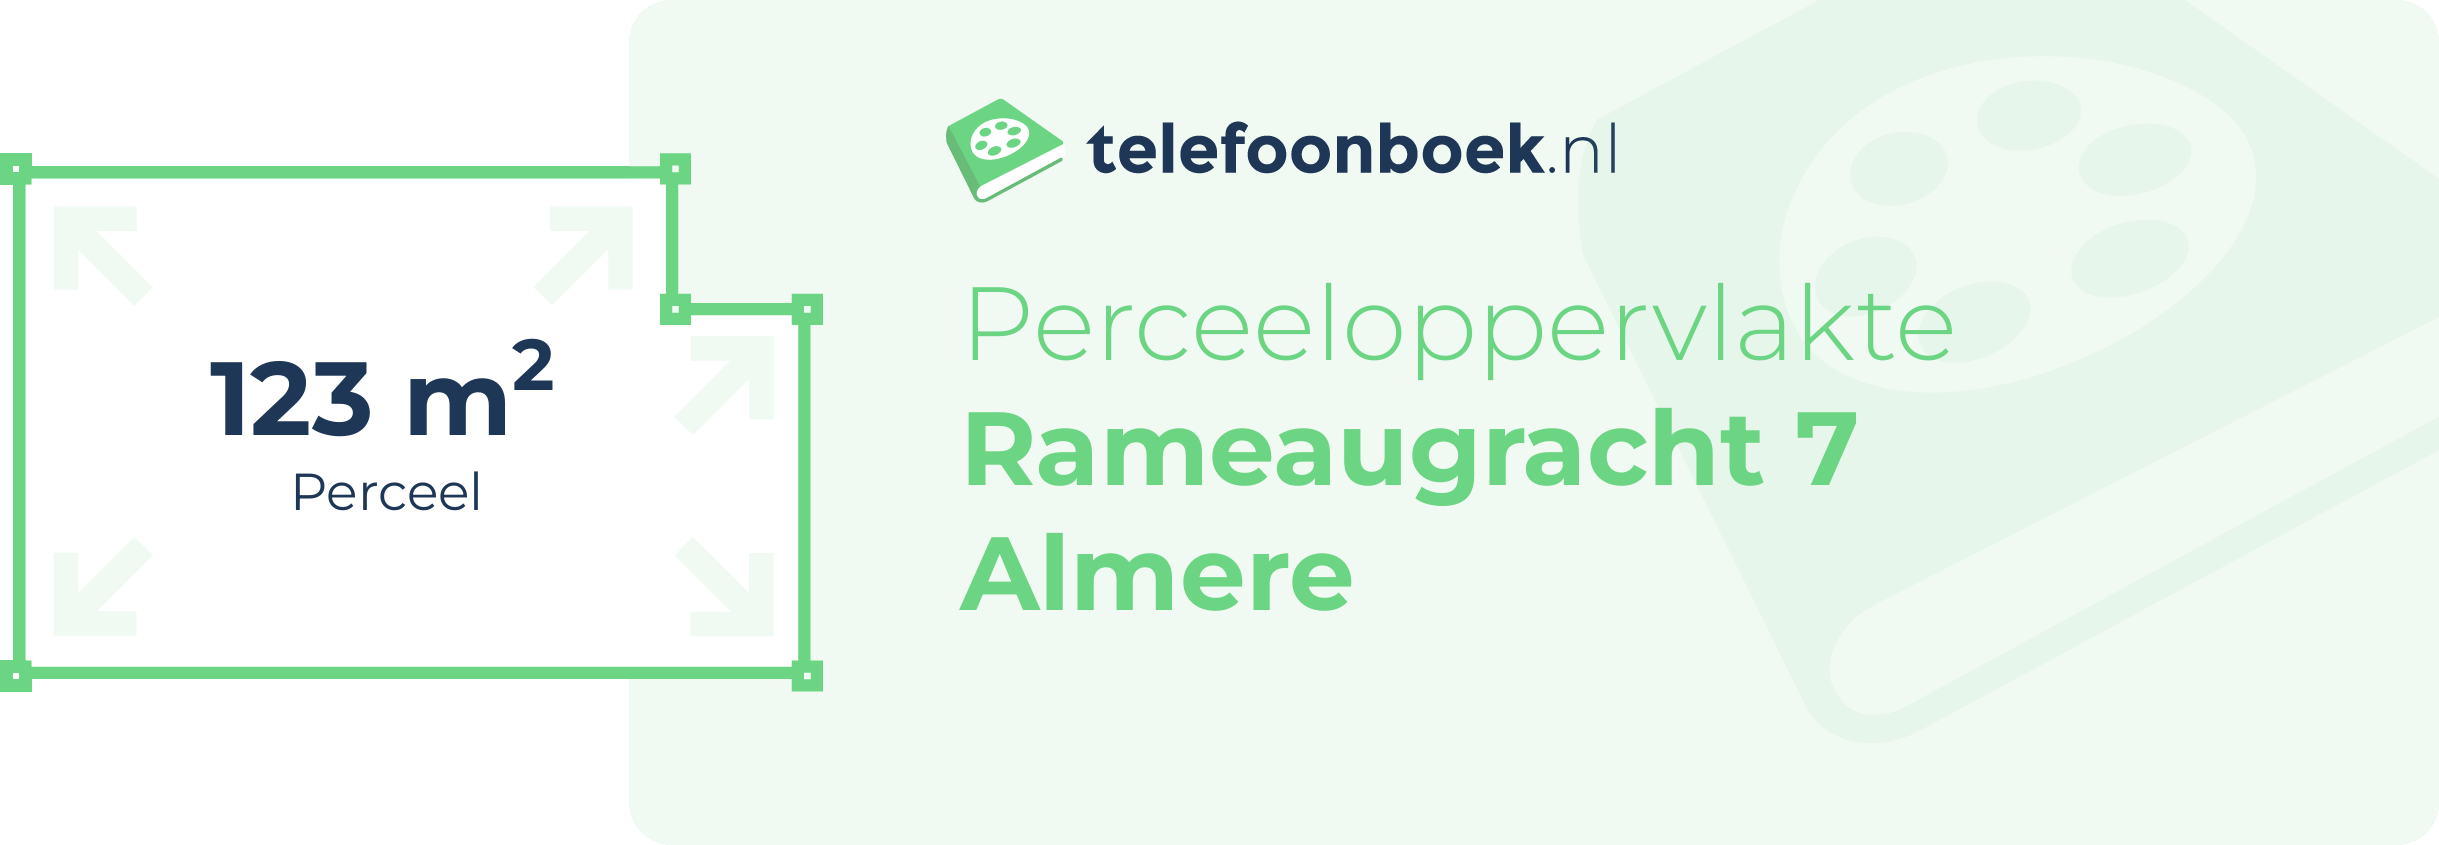 Perceeloppervlakte Rameaugracht 7 Almere